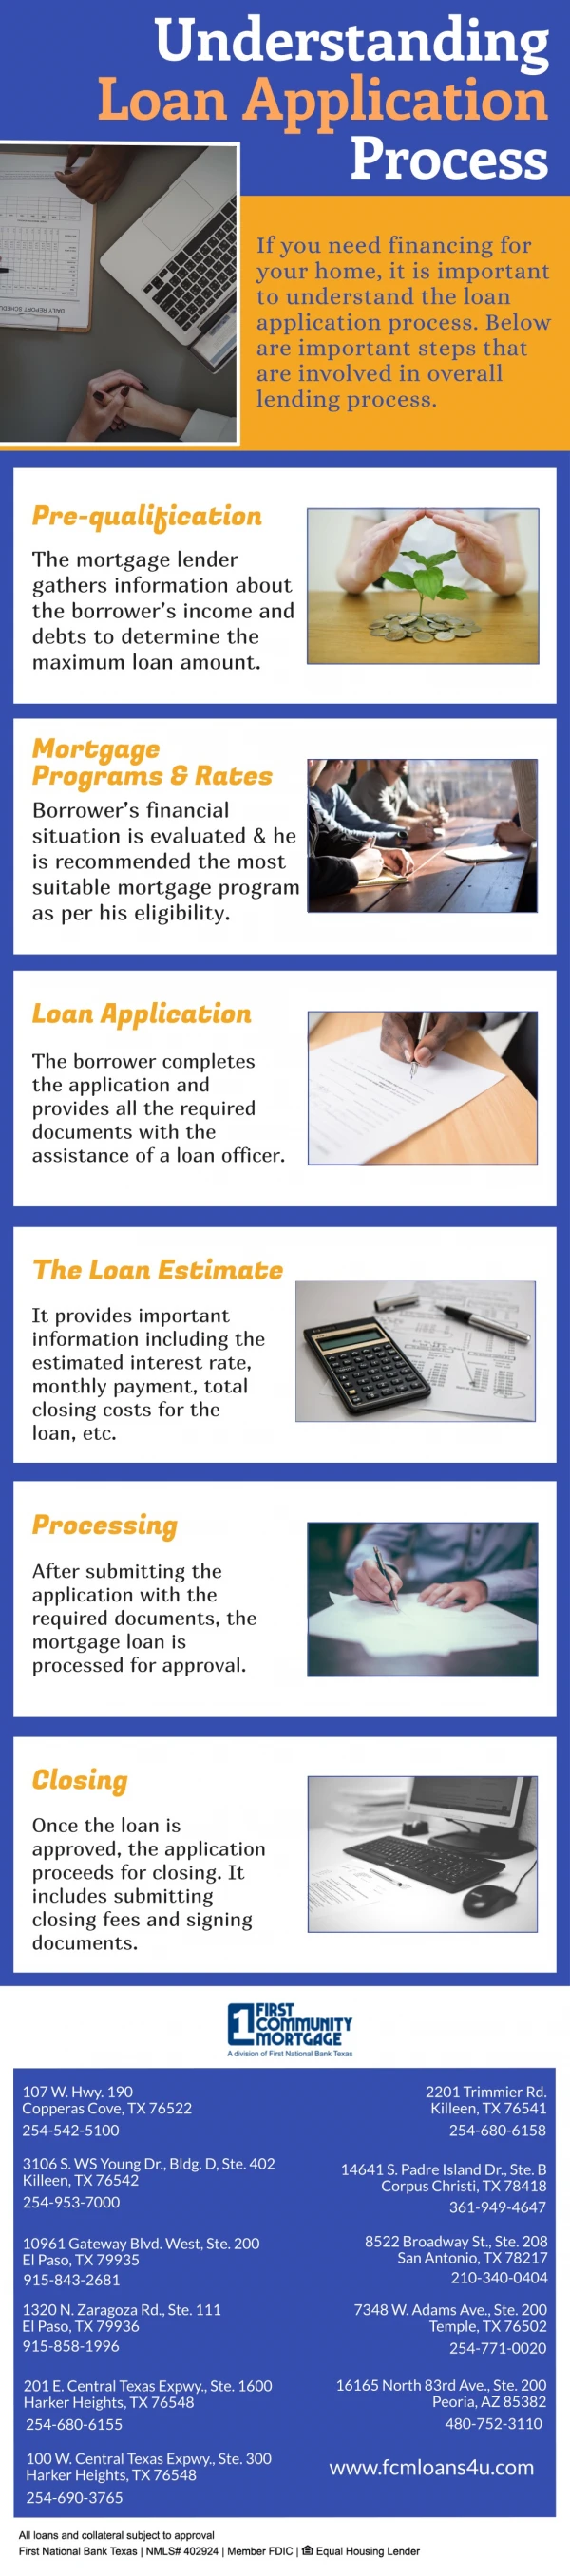 Understanding Loan Application Process